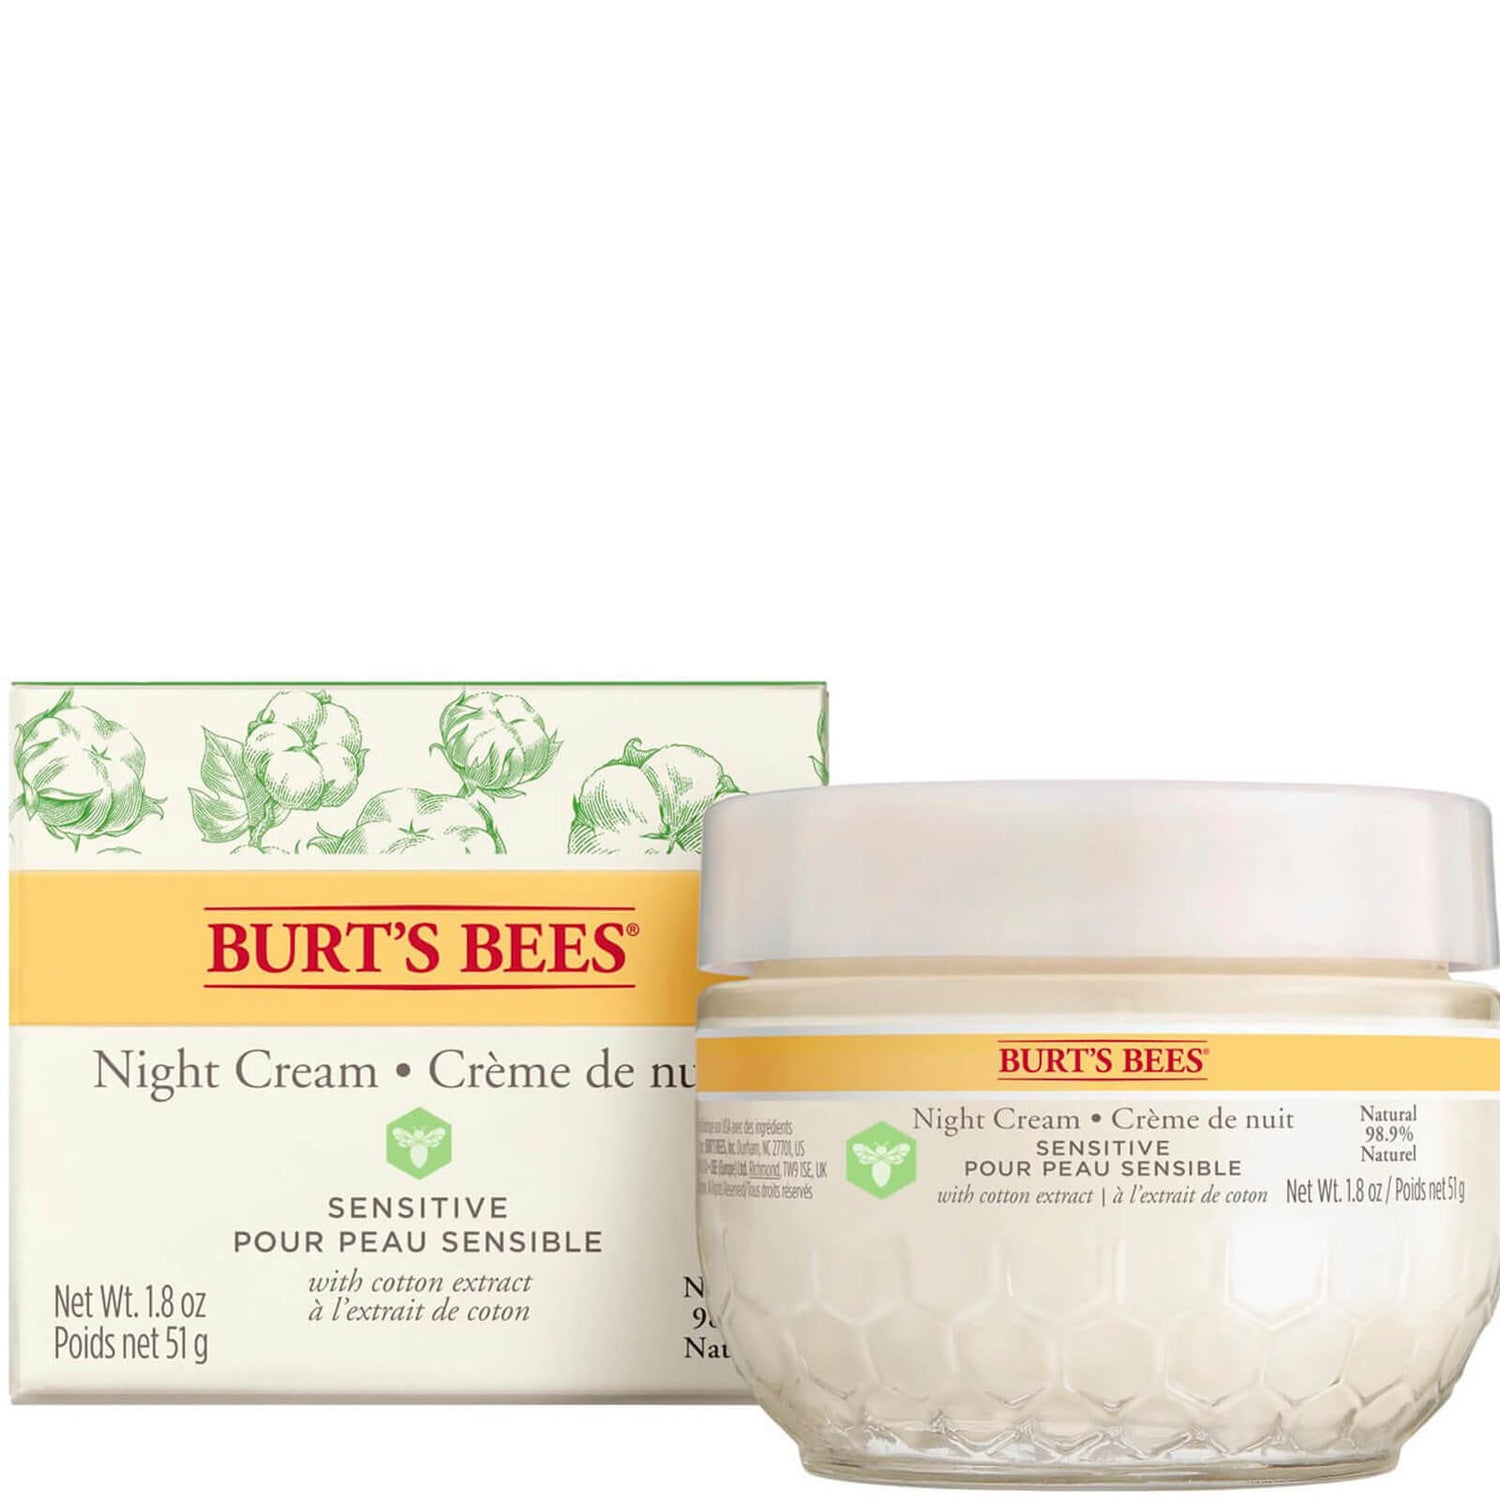 Burt's Bees crema notte pelle sensibile 50 g